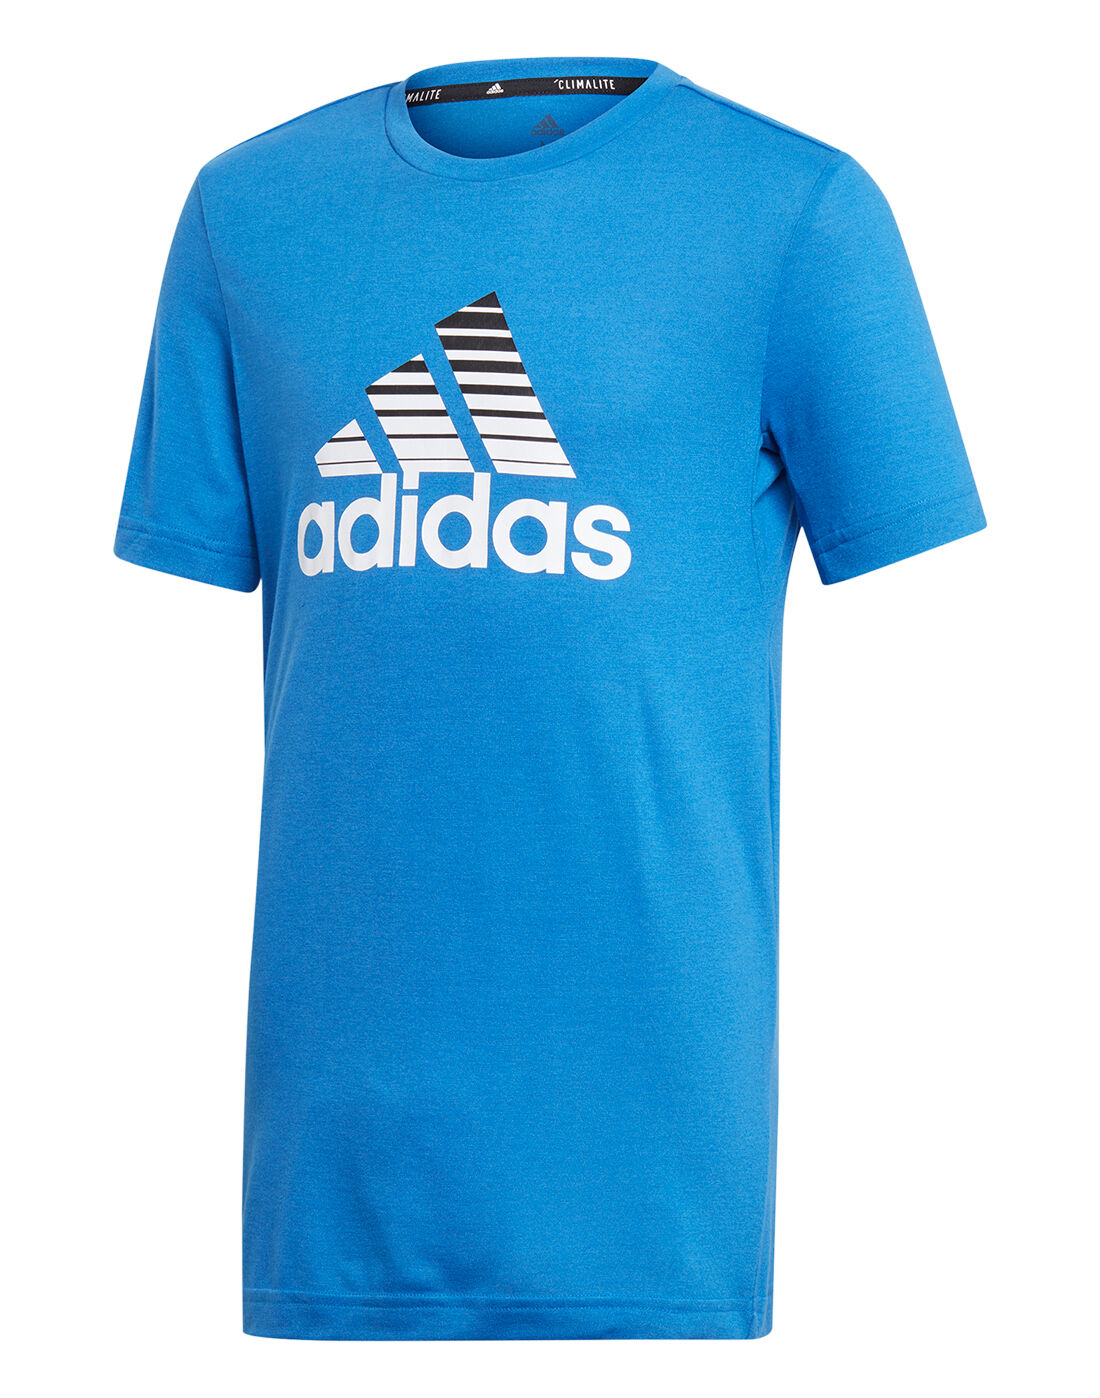 Boy's Blue adidas Logo T-Shirt | Life 